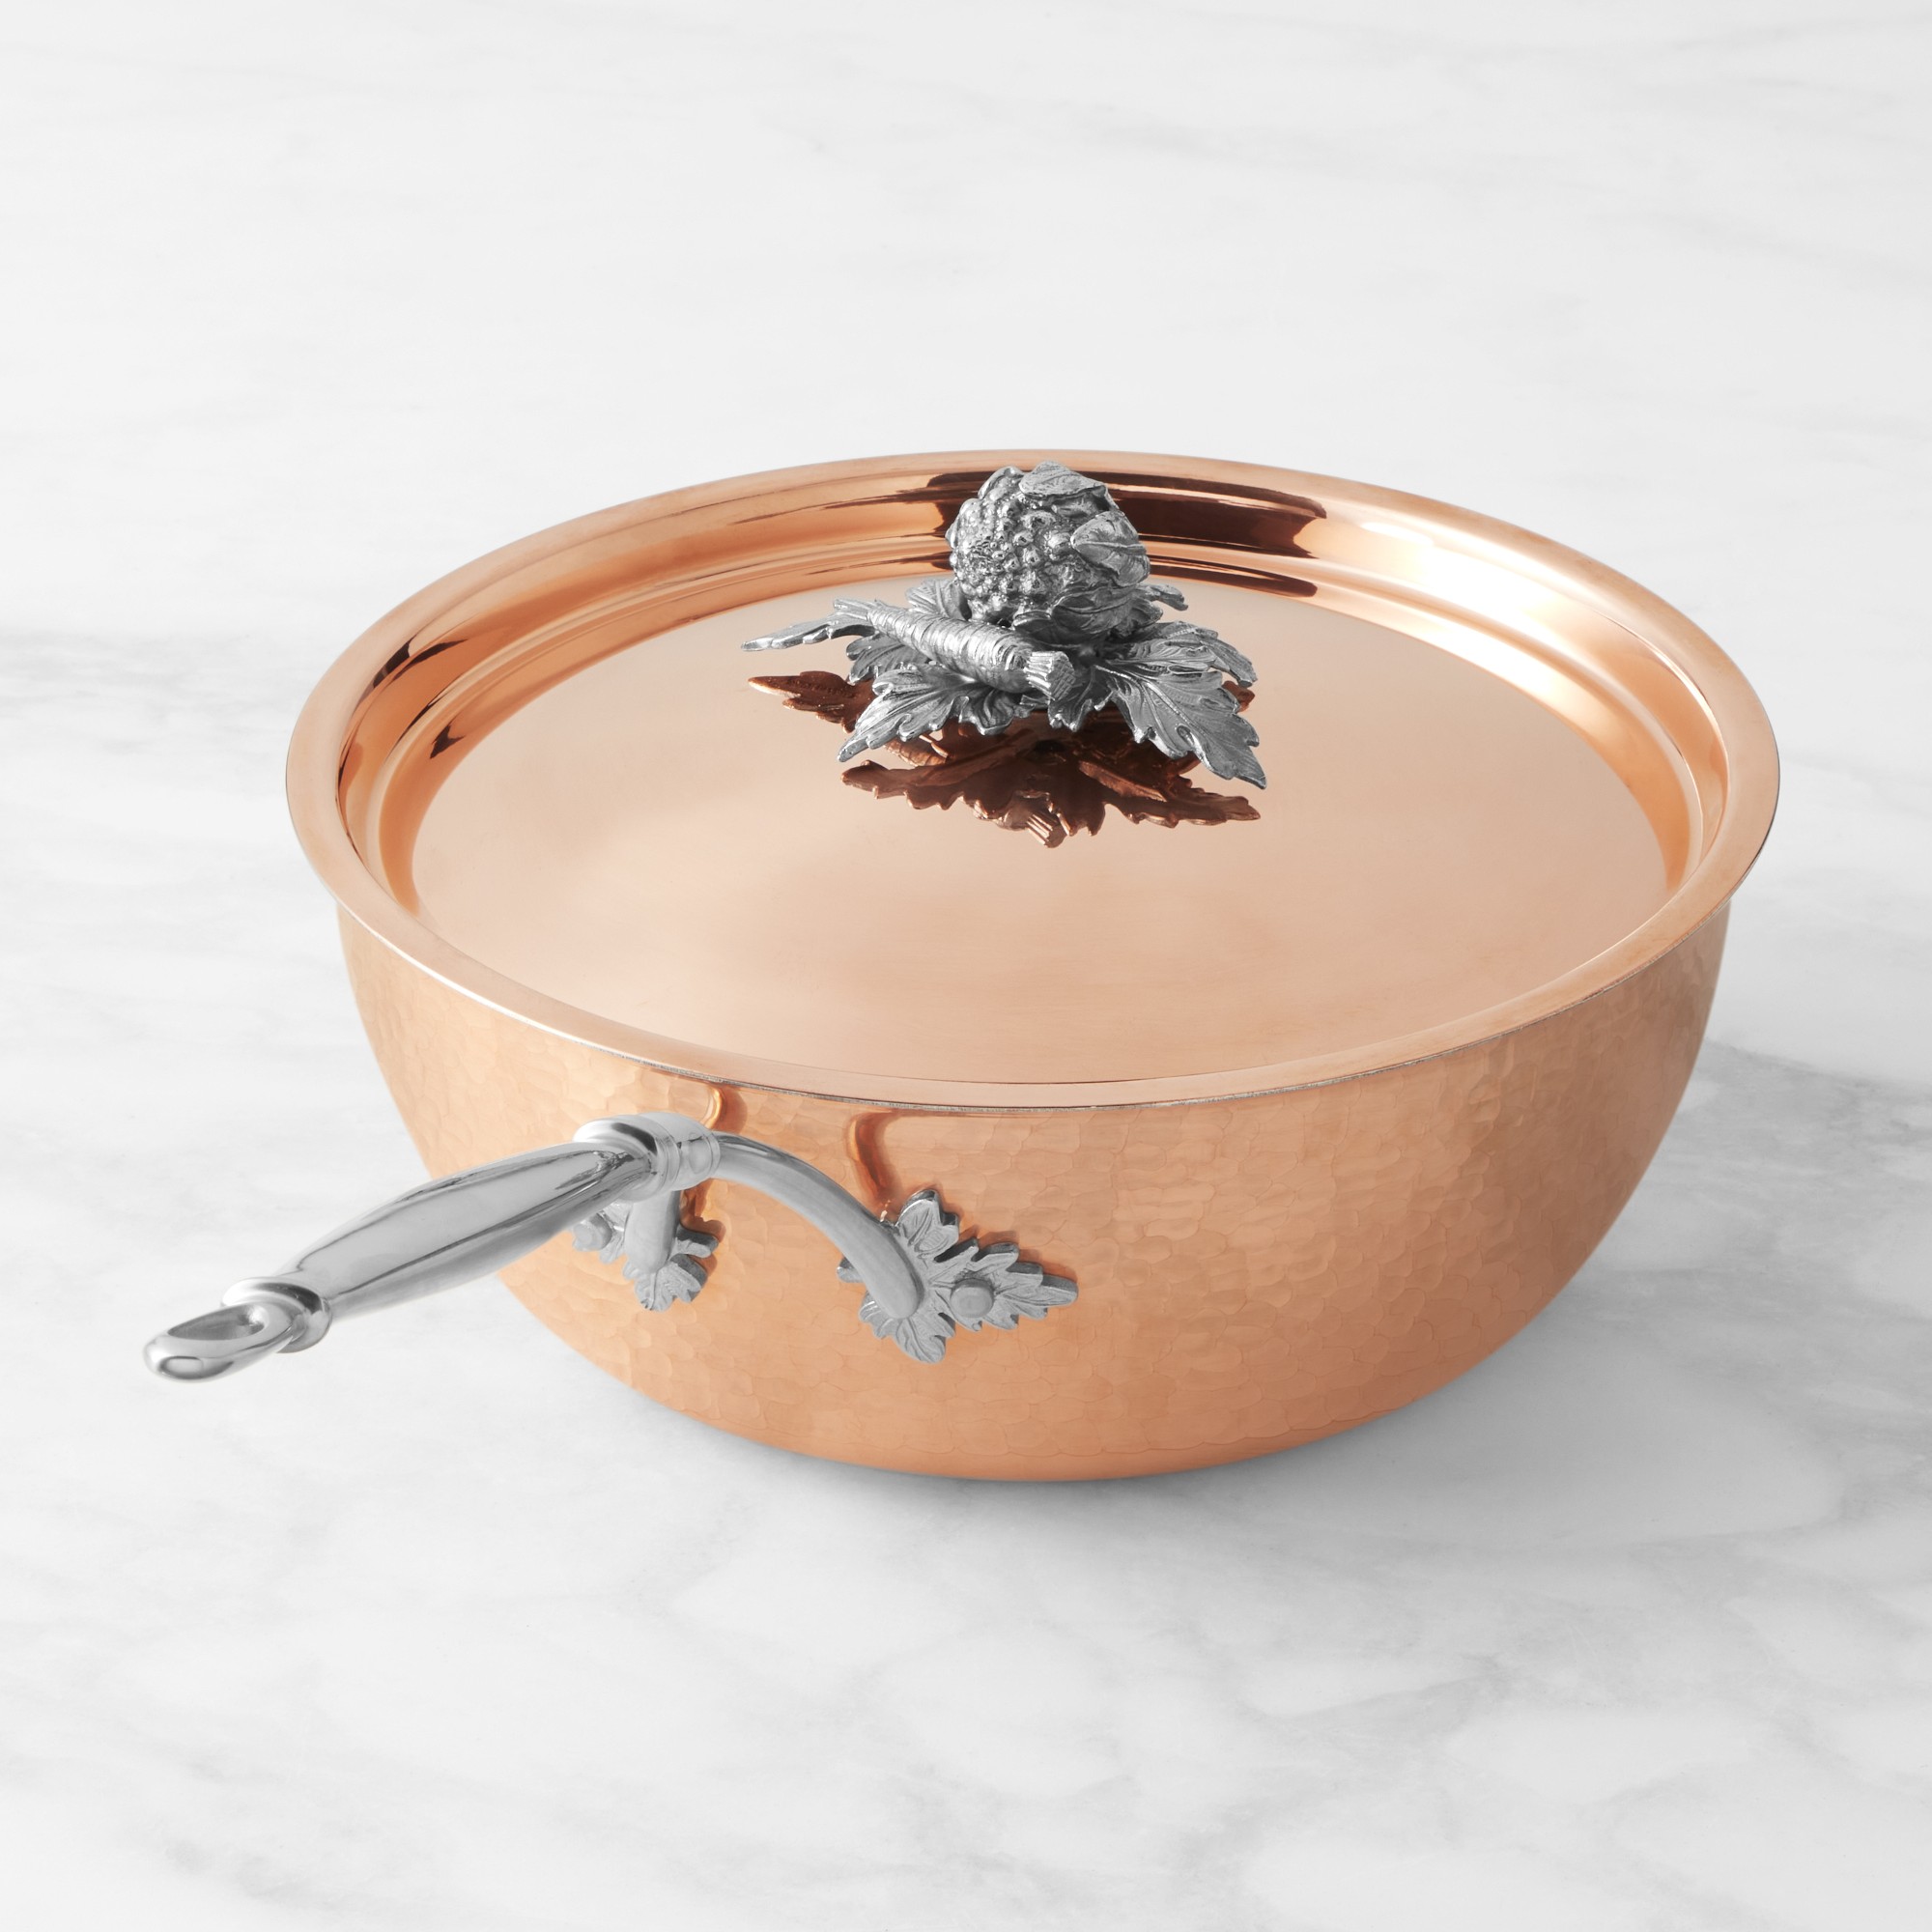 Ruffoni Opus Cupra Hammered Copper Chef's Pan with Cauliflower Knob, 4-Qt.